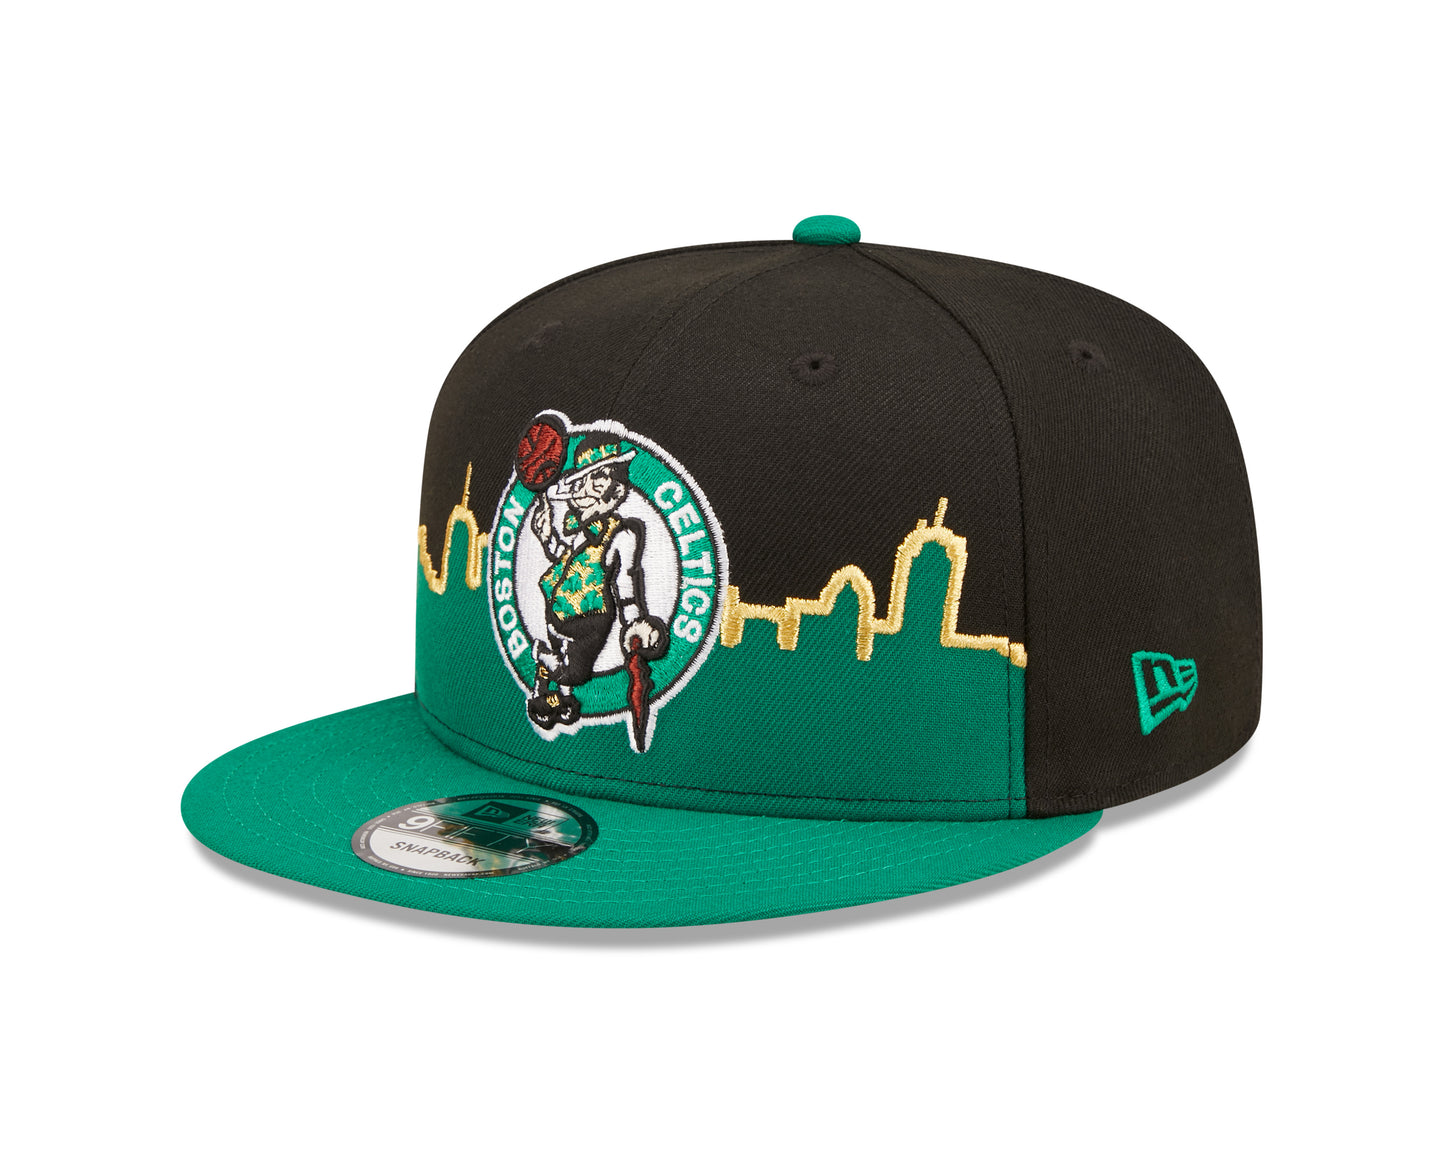 Boston Celtics New Era Tip-Off 9FIFTY Snap Back Hat - Green/Black